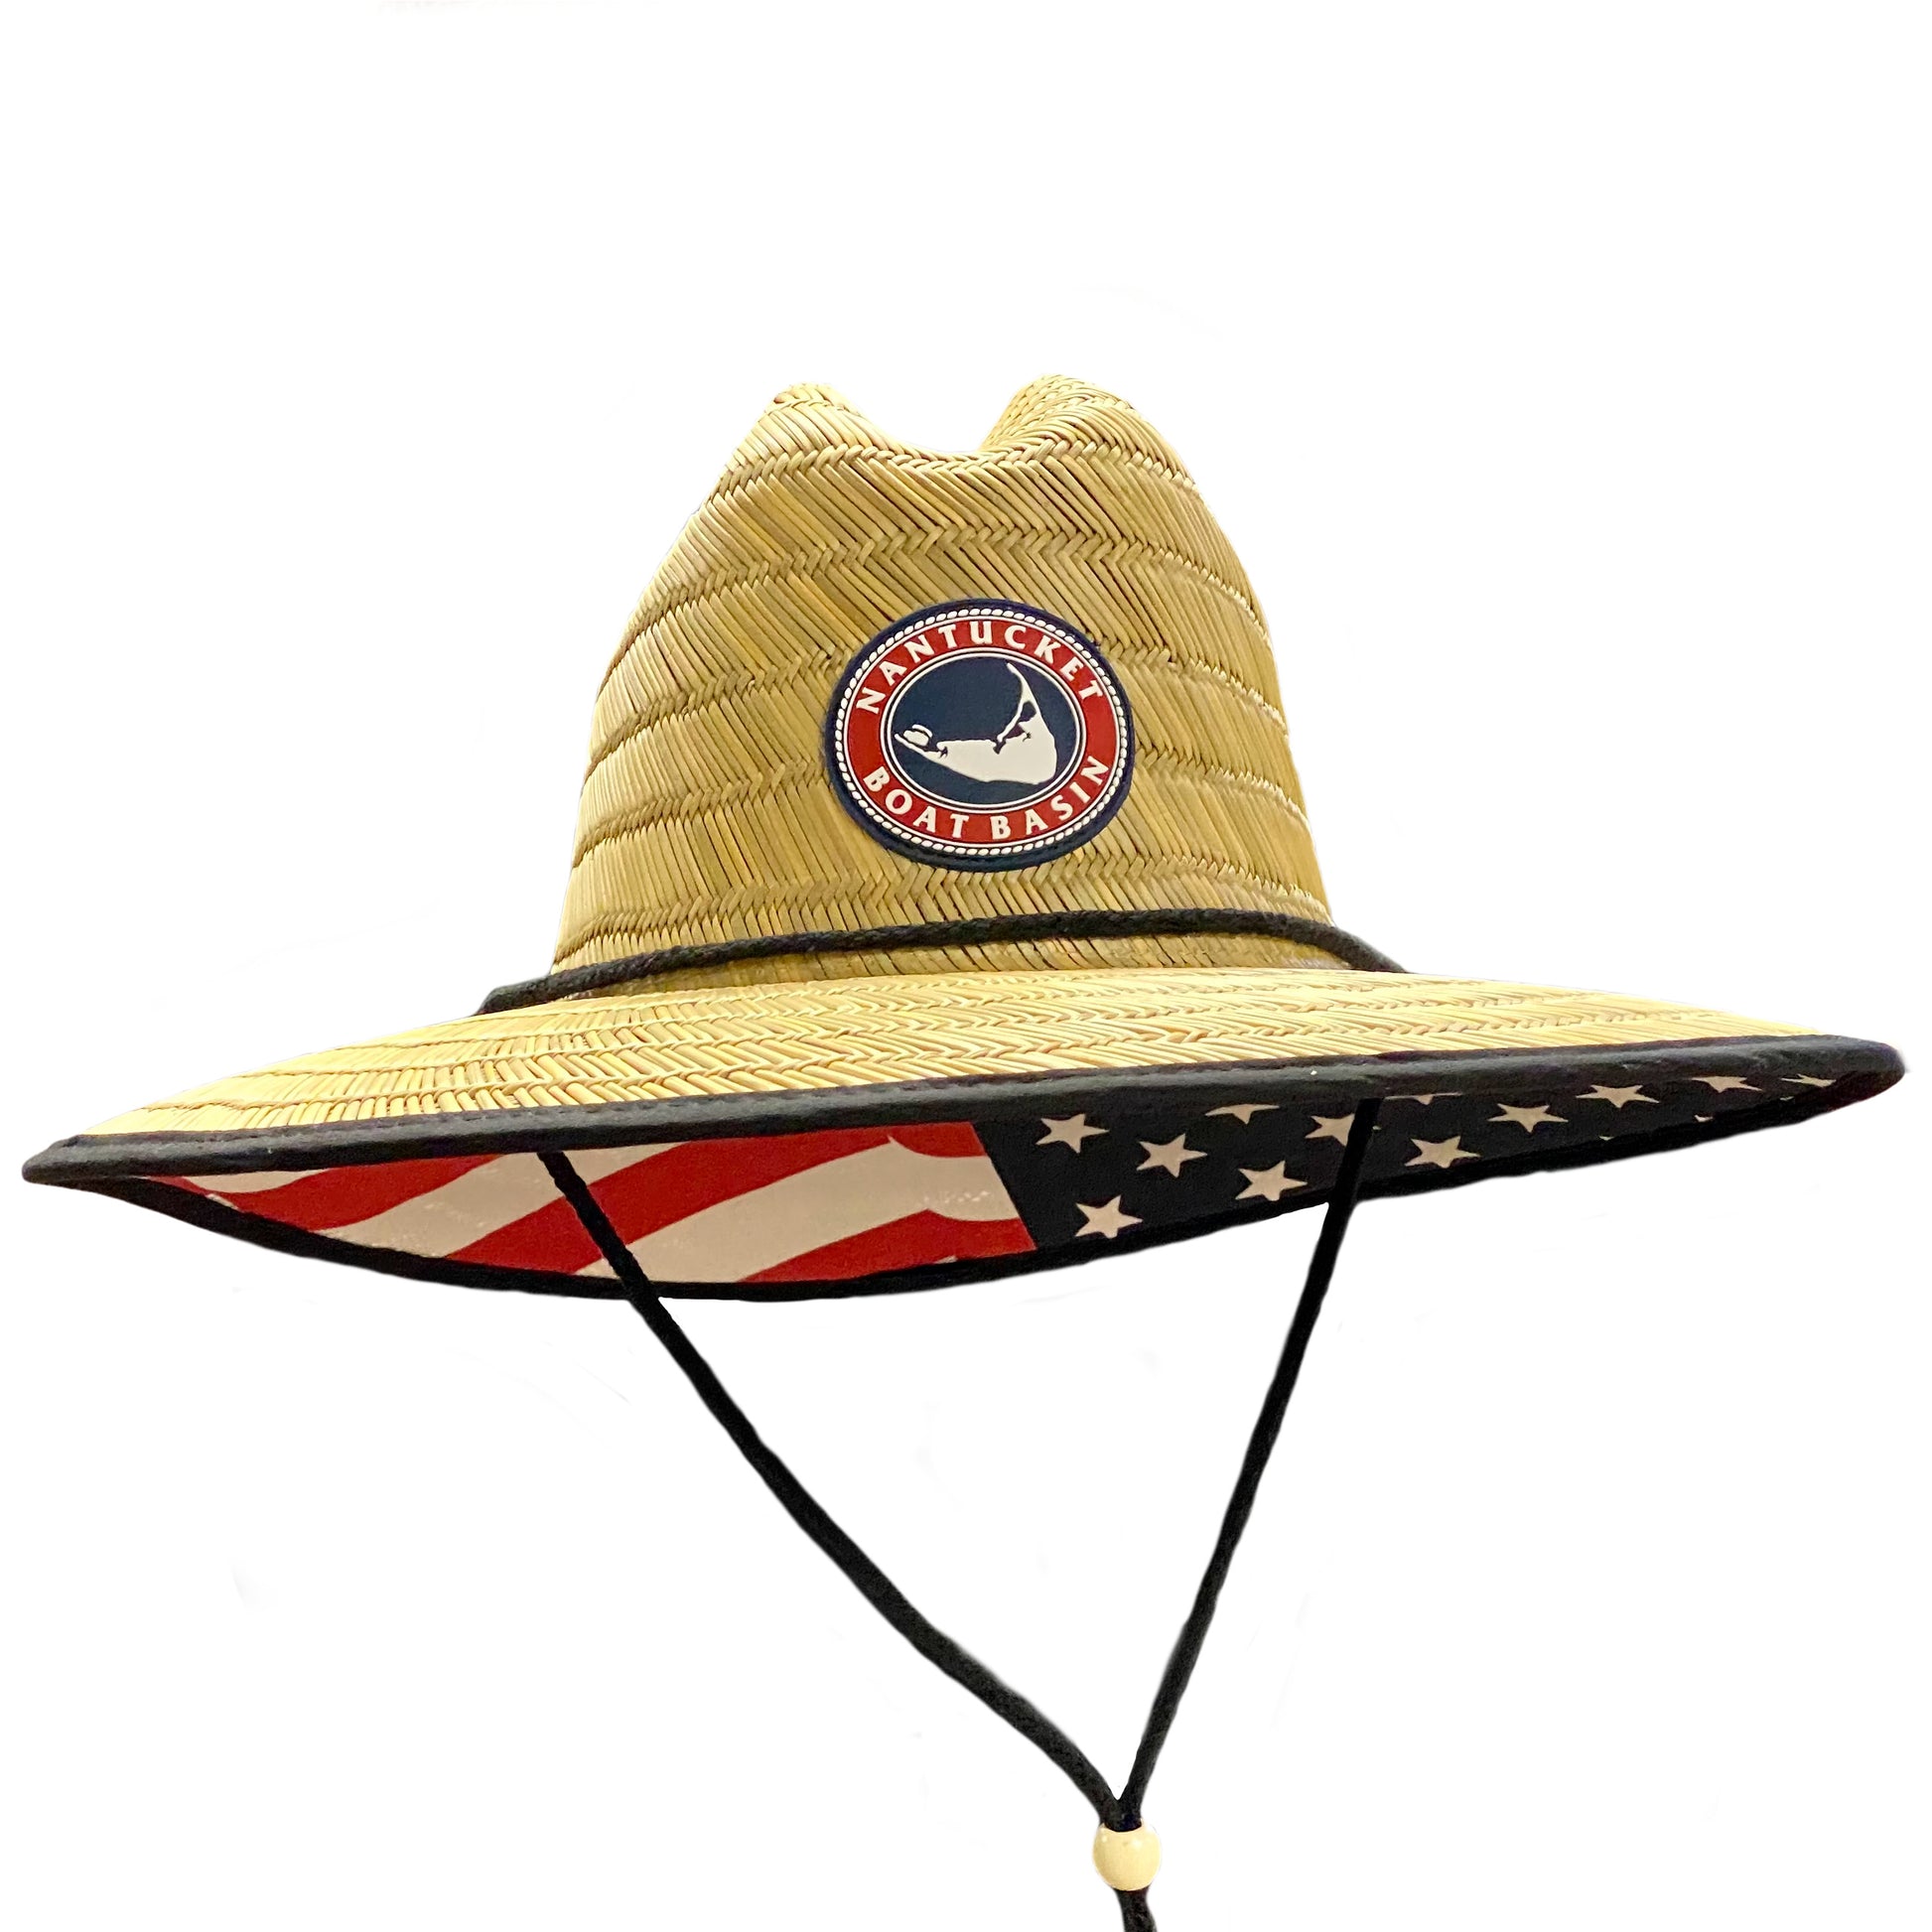 Nantucket Boat Basin Straw Hat